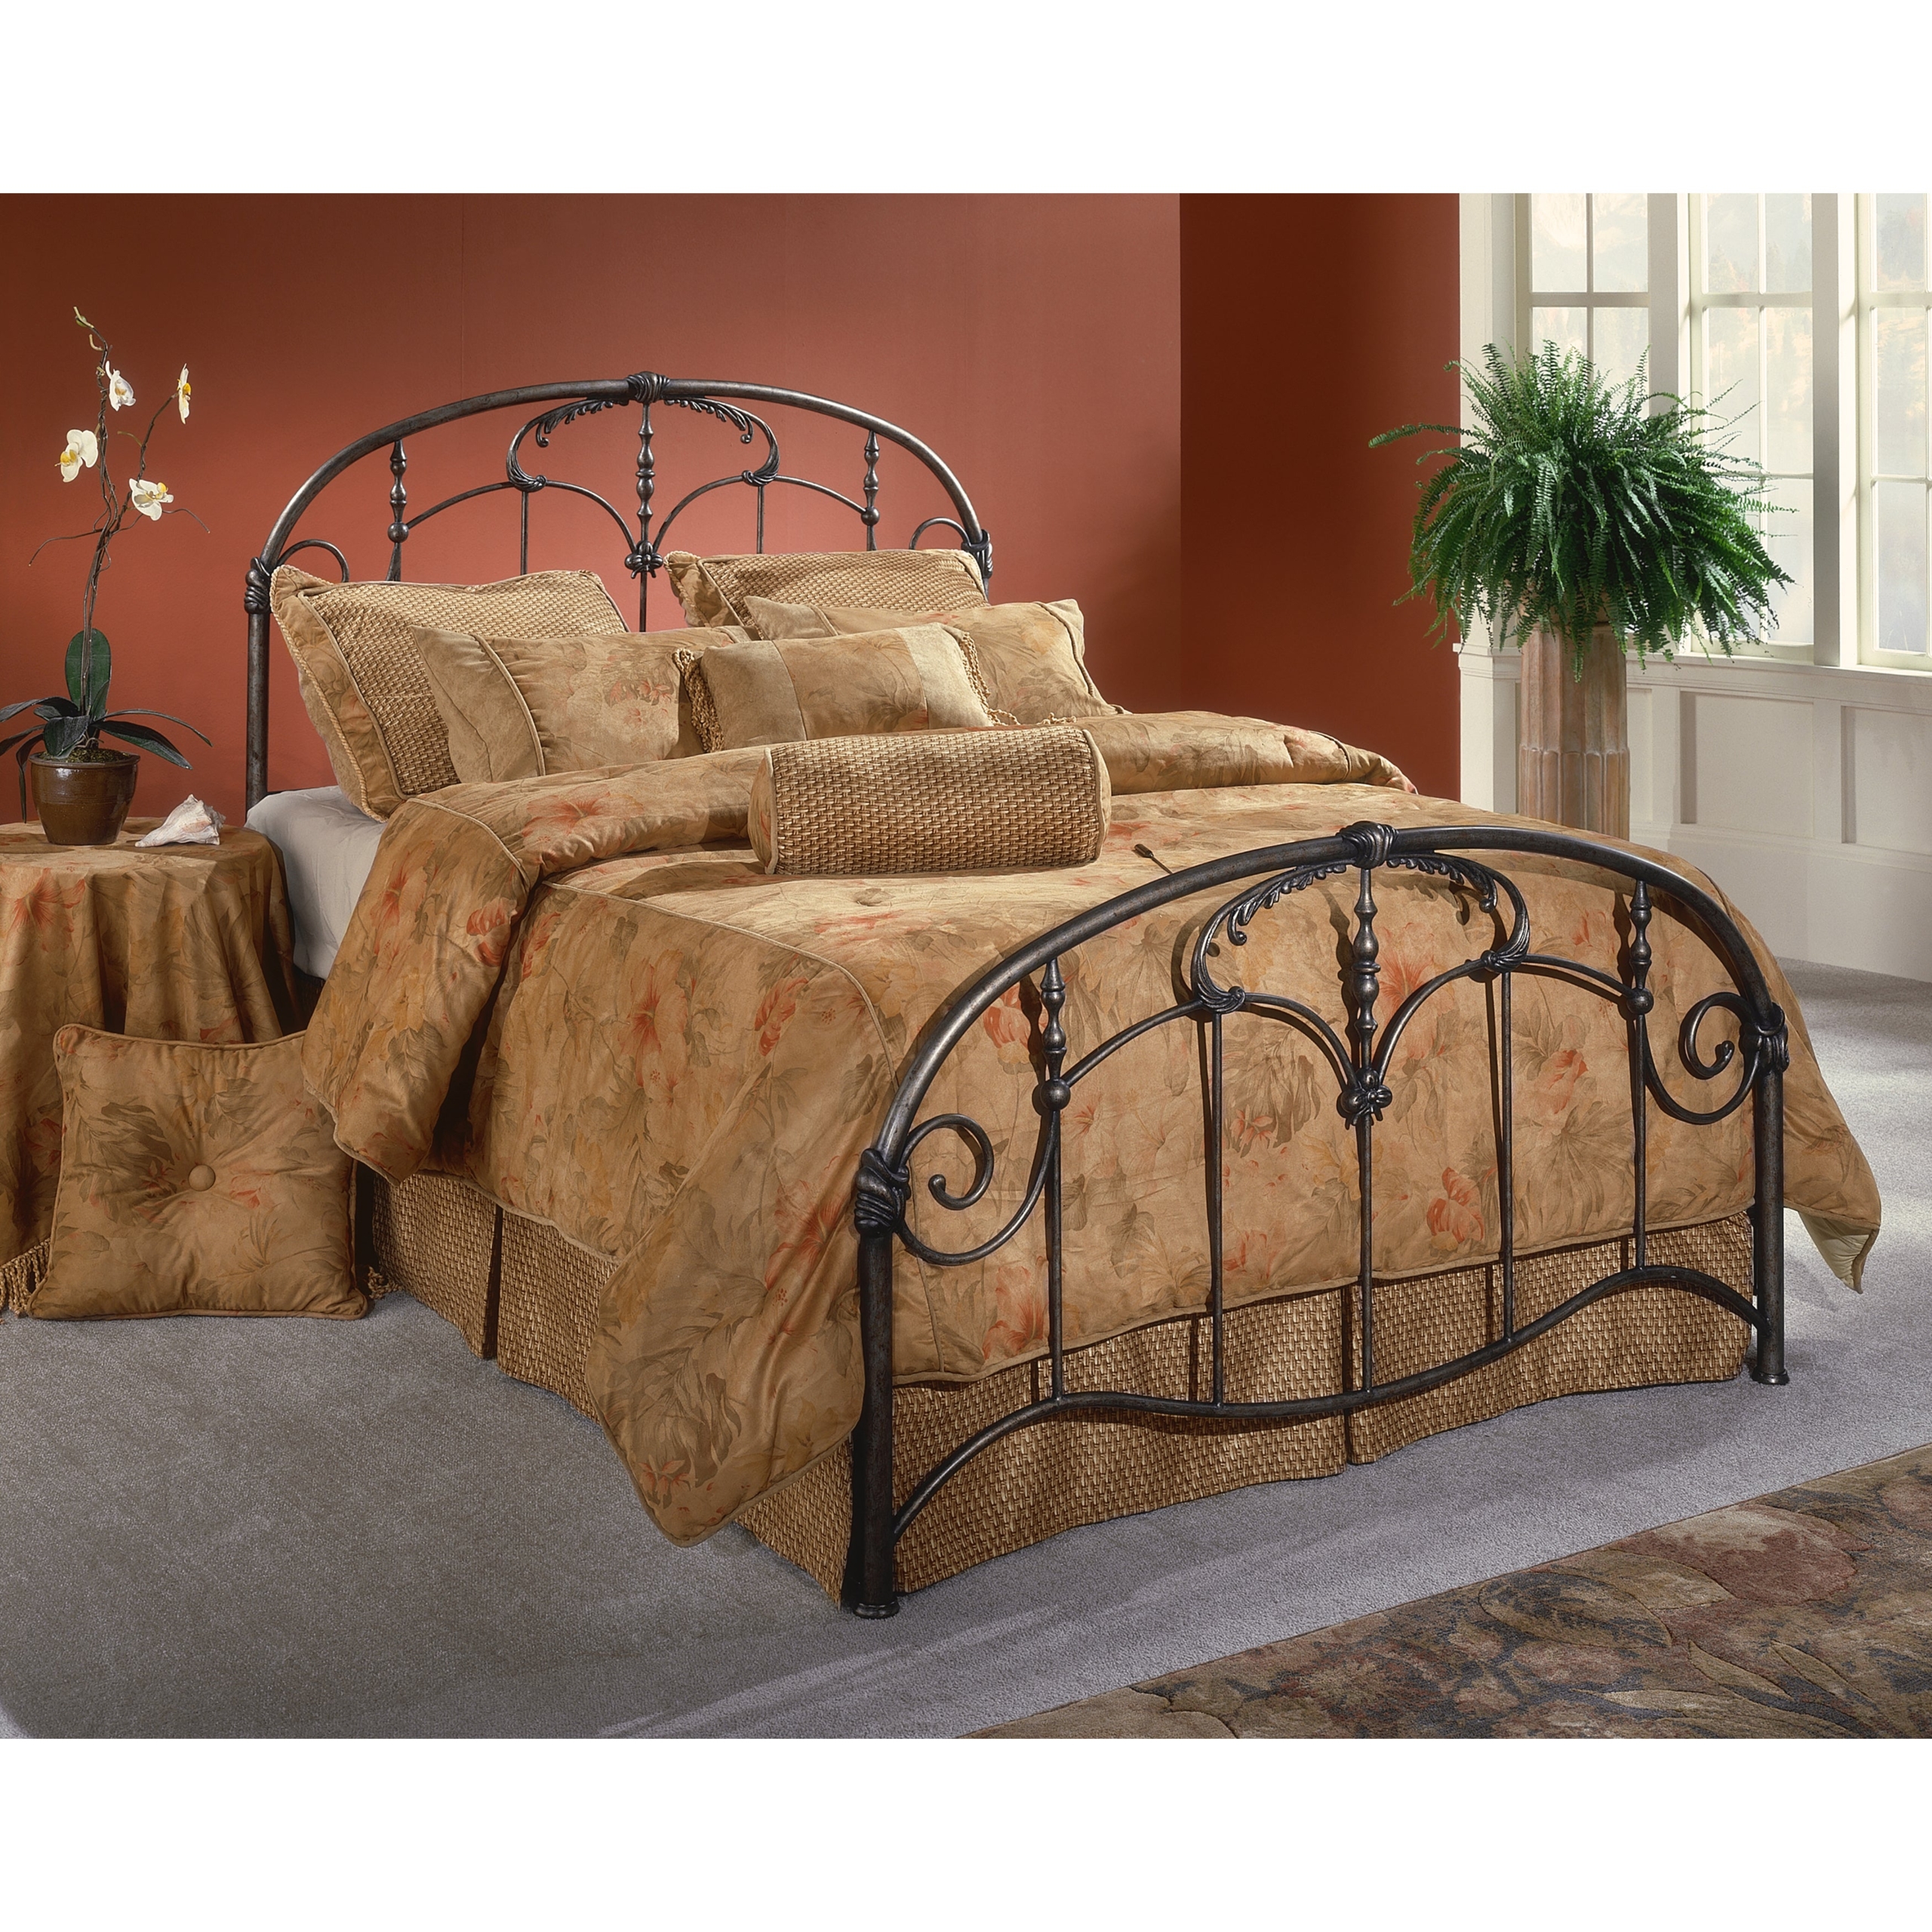 Jacqueline antique iron bed